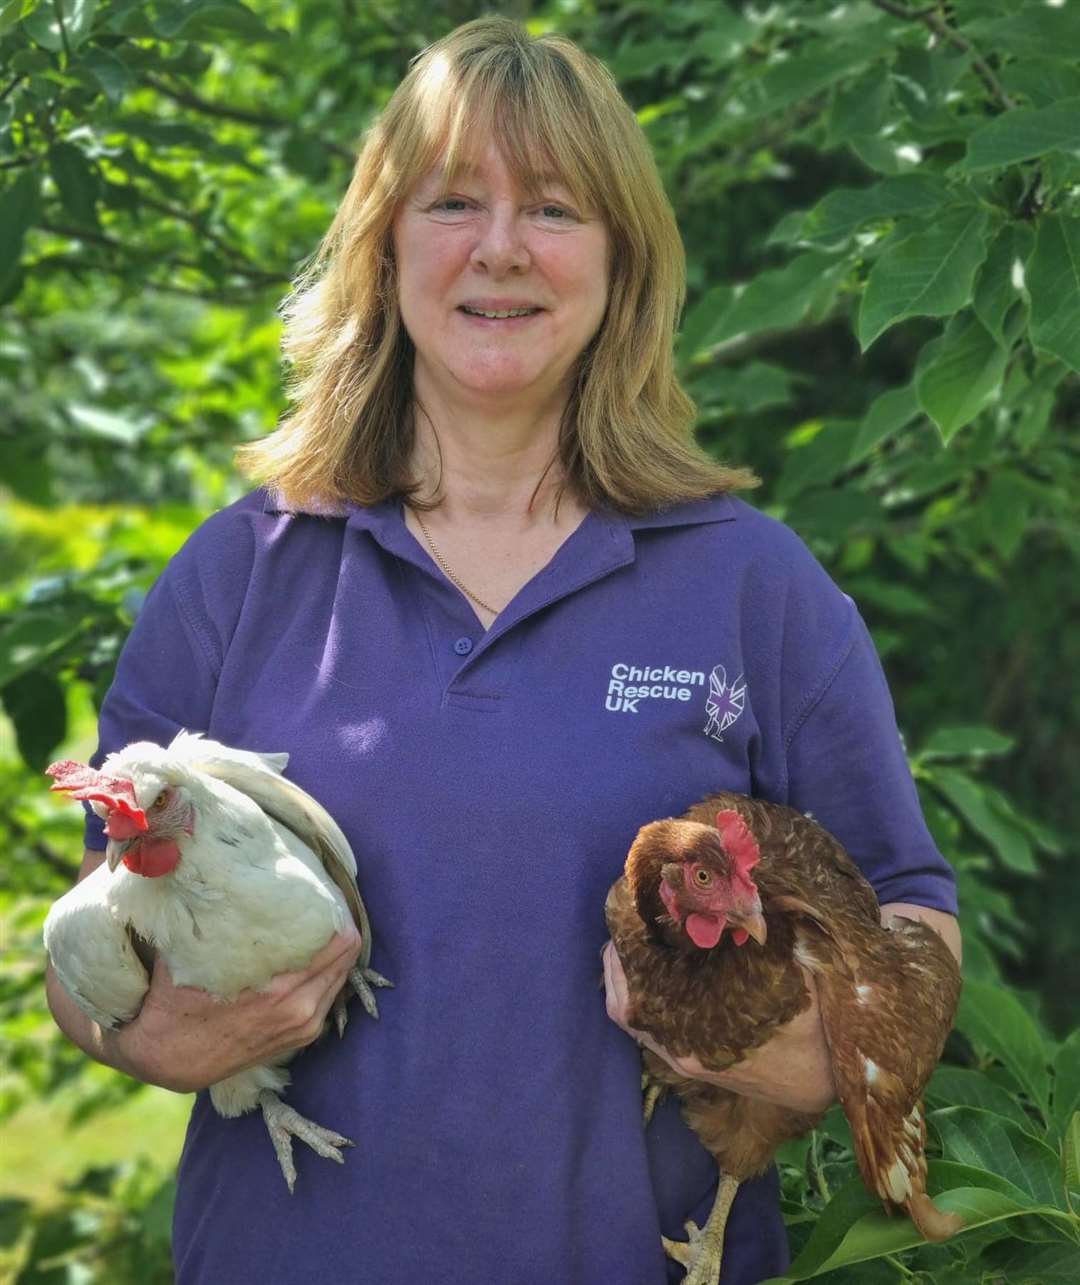 Linda volunteers for Chicken Rescue UK Swanley. Photo: Linda O'Mahony